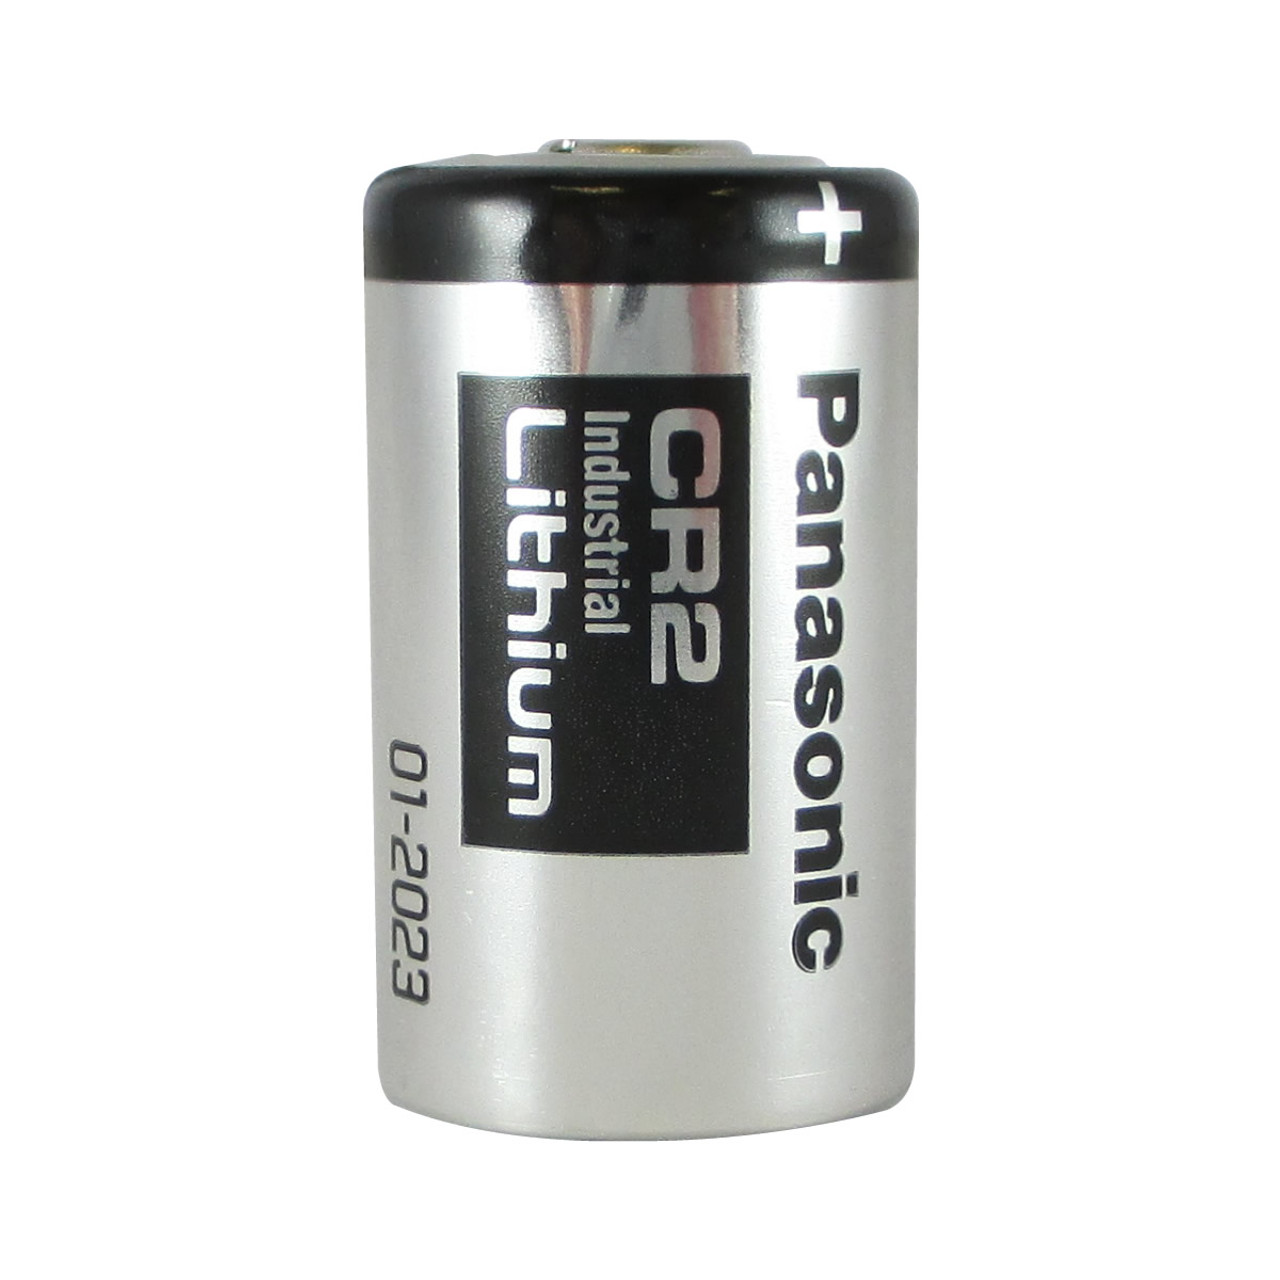 Panasonic CR2 Lithium Batteries (3V, 850mAh, 2-Pack)